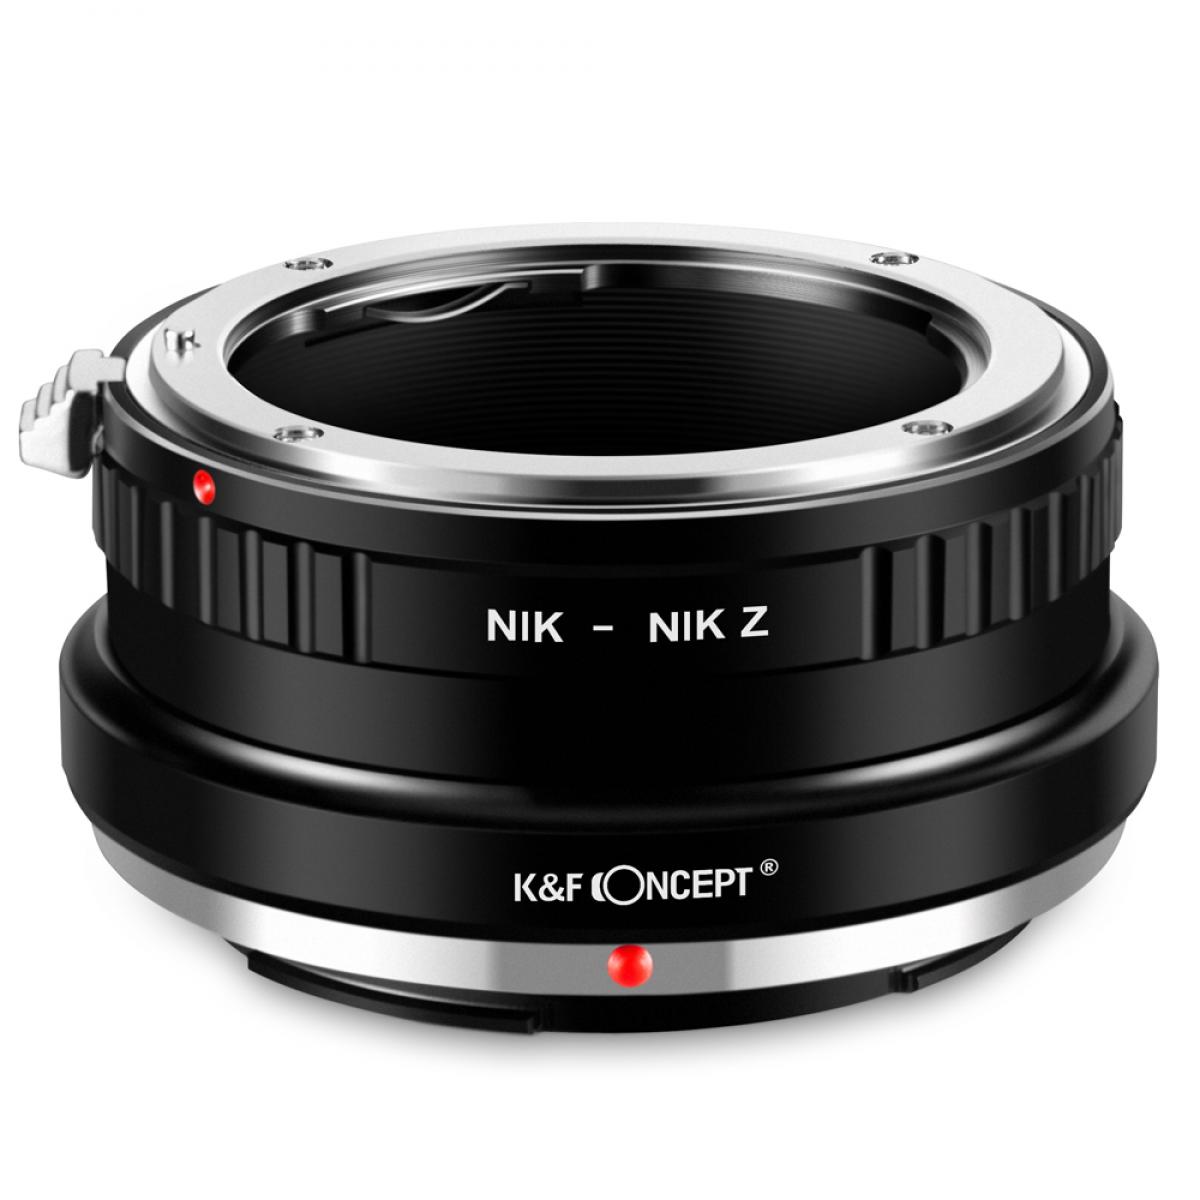 K&F Concept Nikon F/AF AI AI-S Mount Lens to Nikon Z6 Z7 Camera 